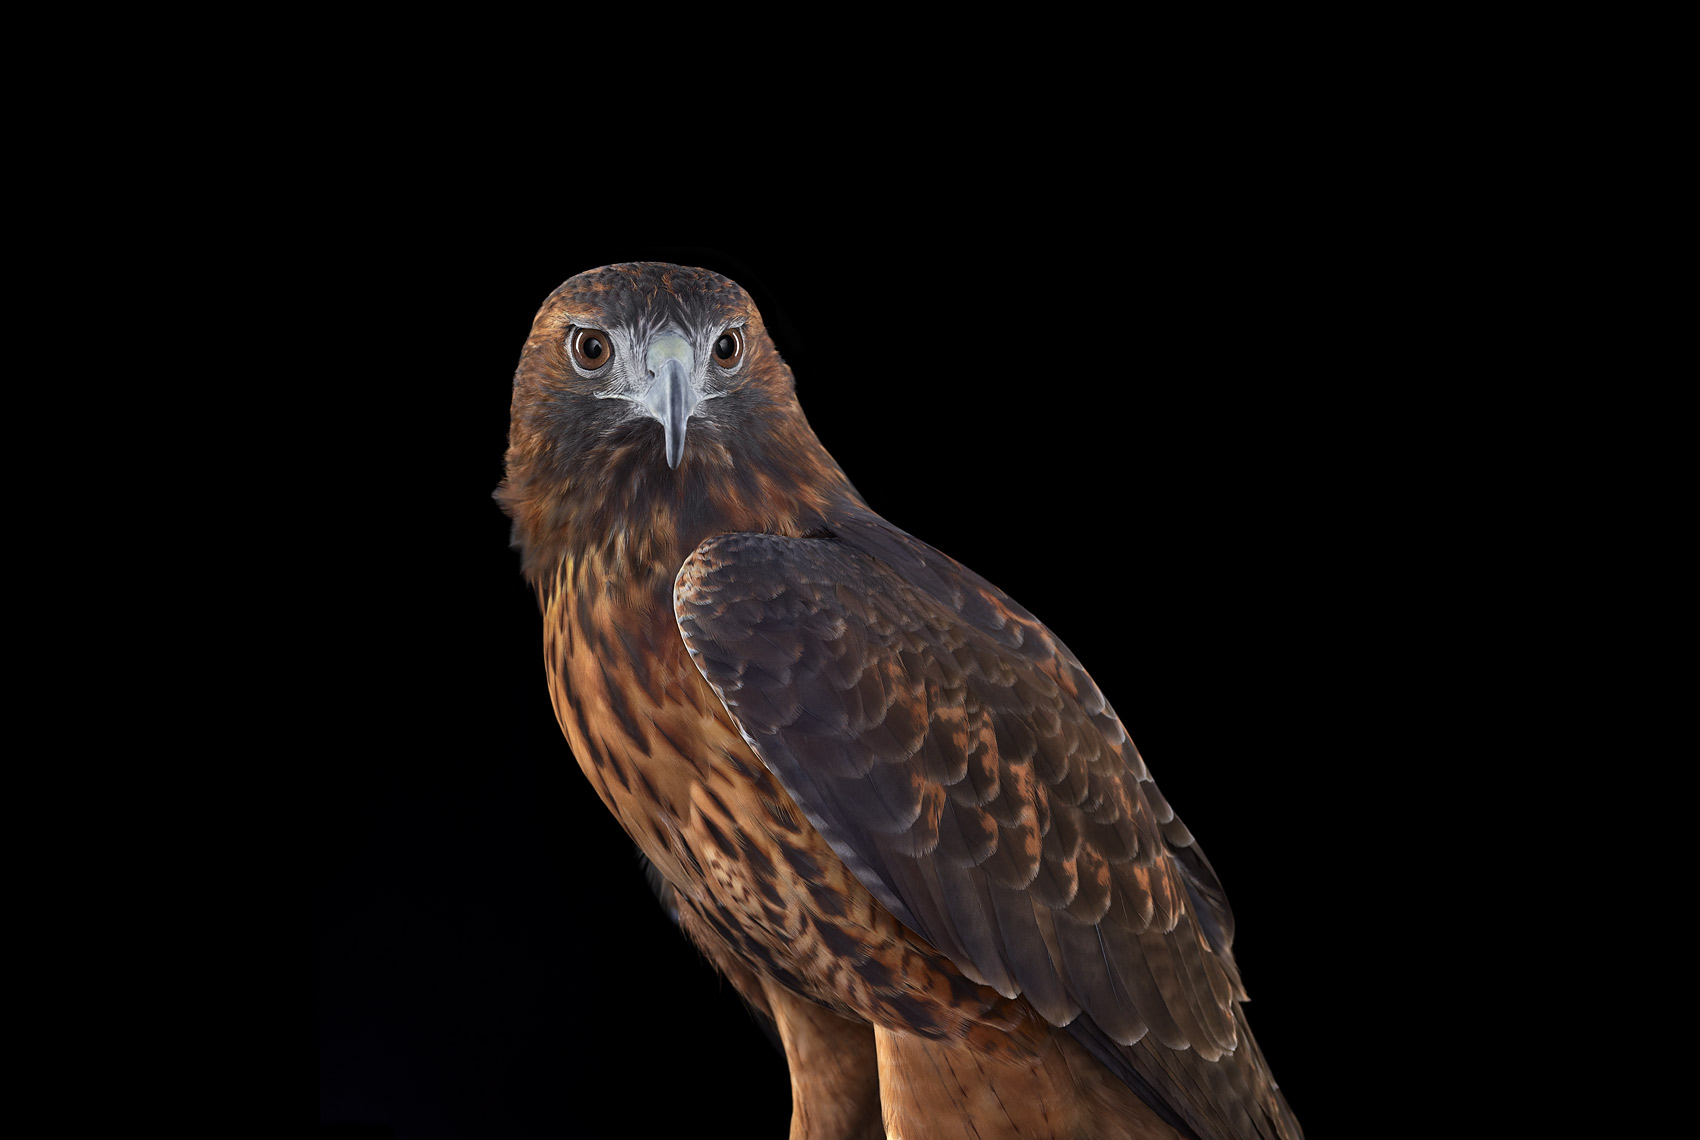 Red tailed hawk studio portrait by fine art wildlife photographer Brad Wilson